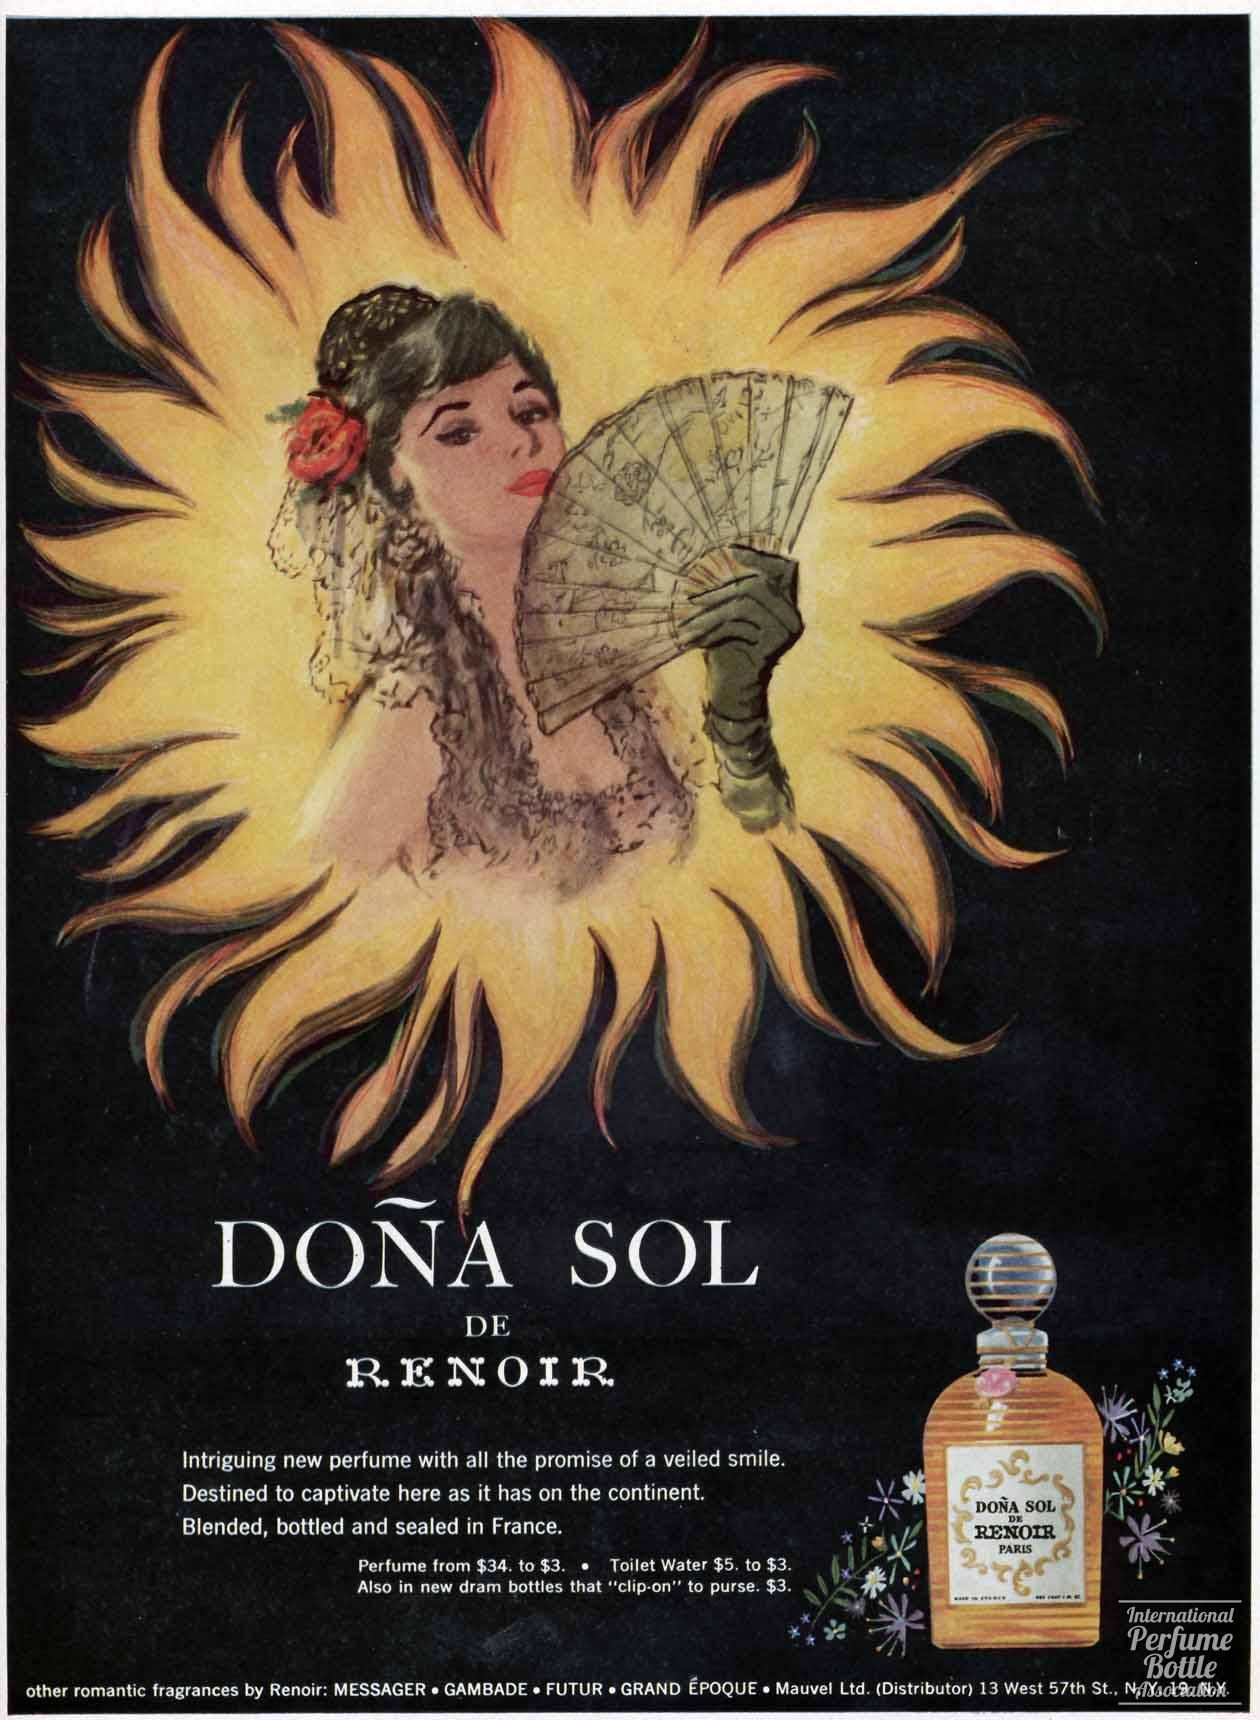 "Doña Sol" by Renoir Advertisement - 1955